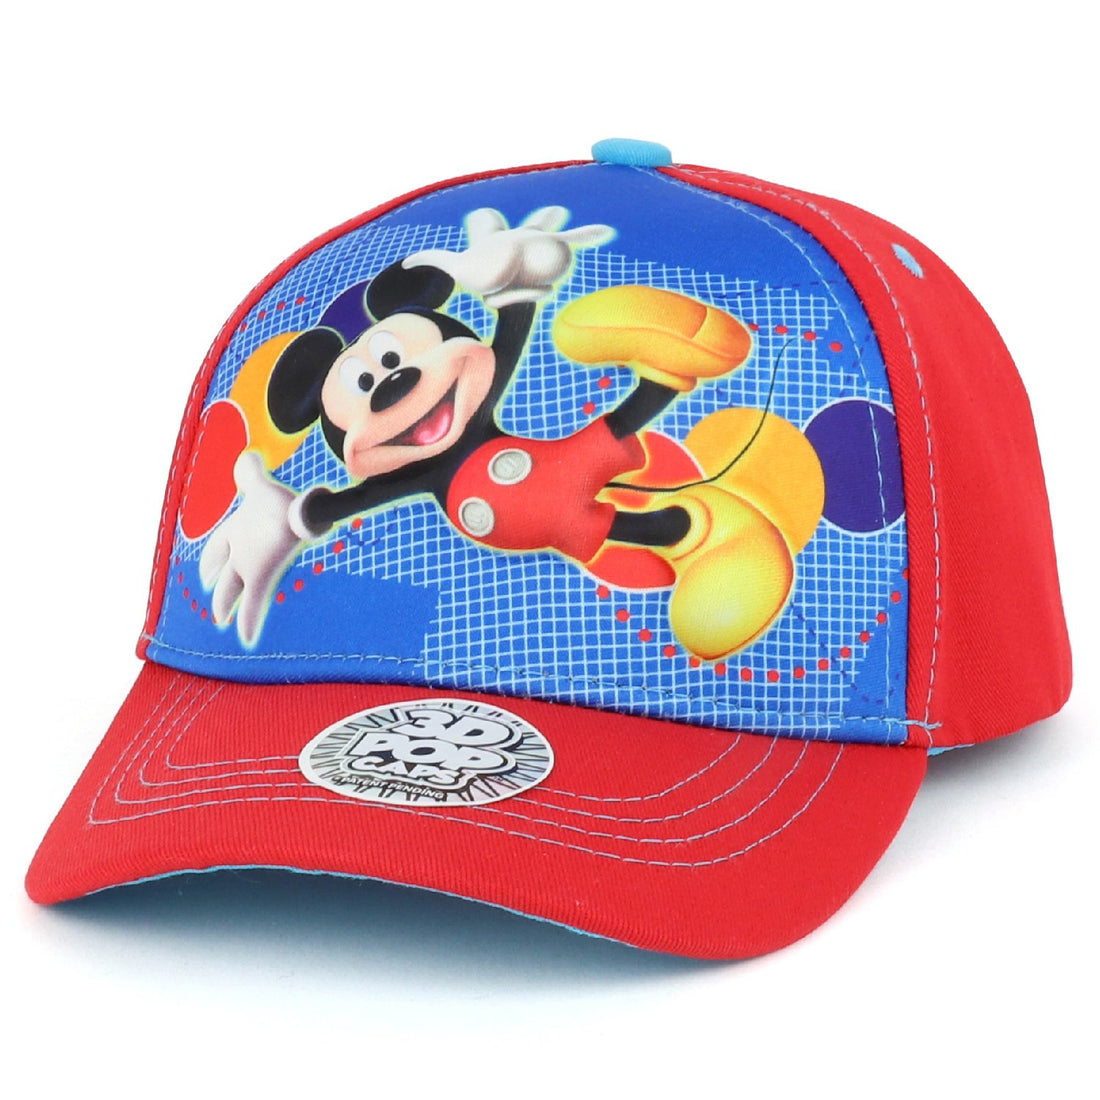 Trendy Apparel Shop Boy's Kids Youth Size Mickey Mouse 3D Pop Baseball Cap